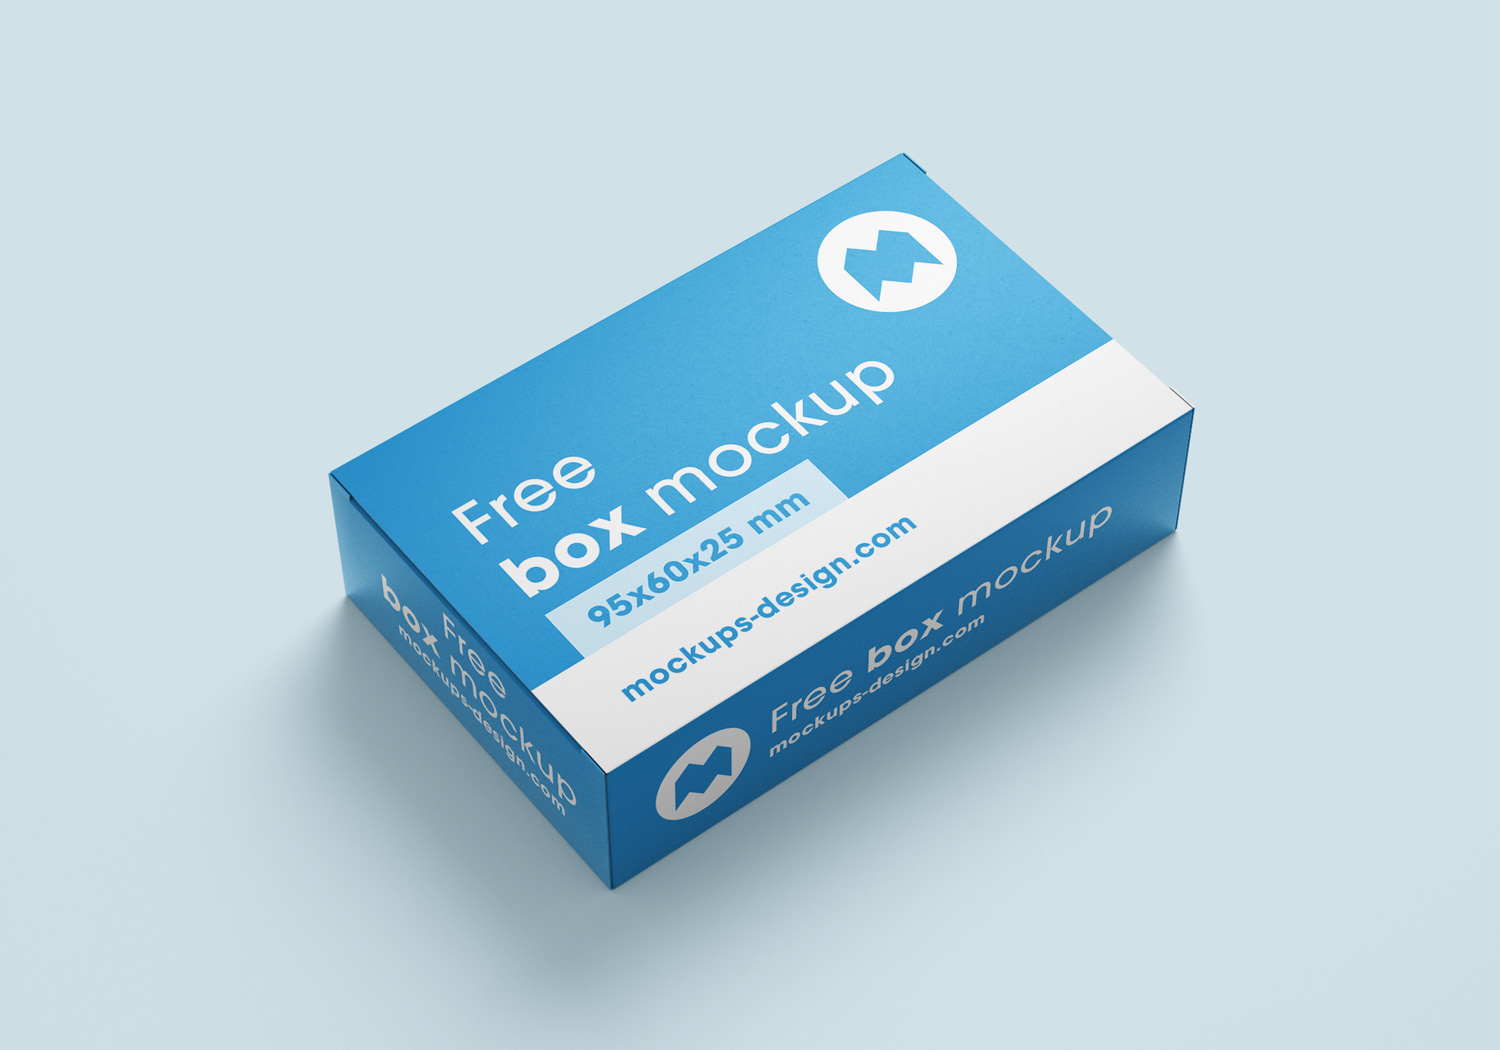 Paper Box Mockup | Free Mockup